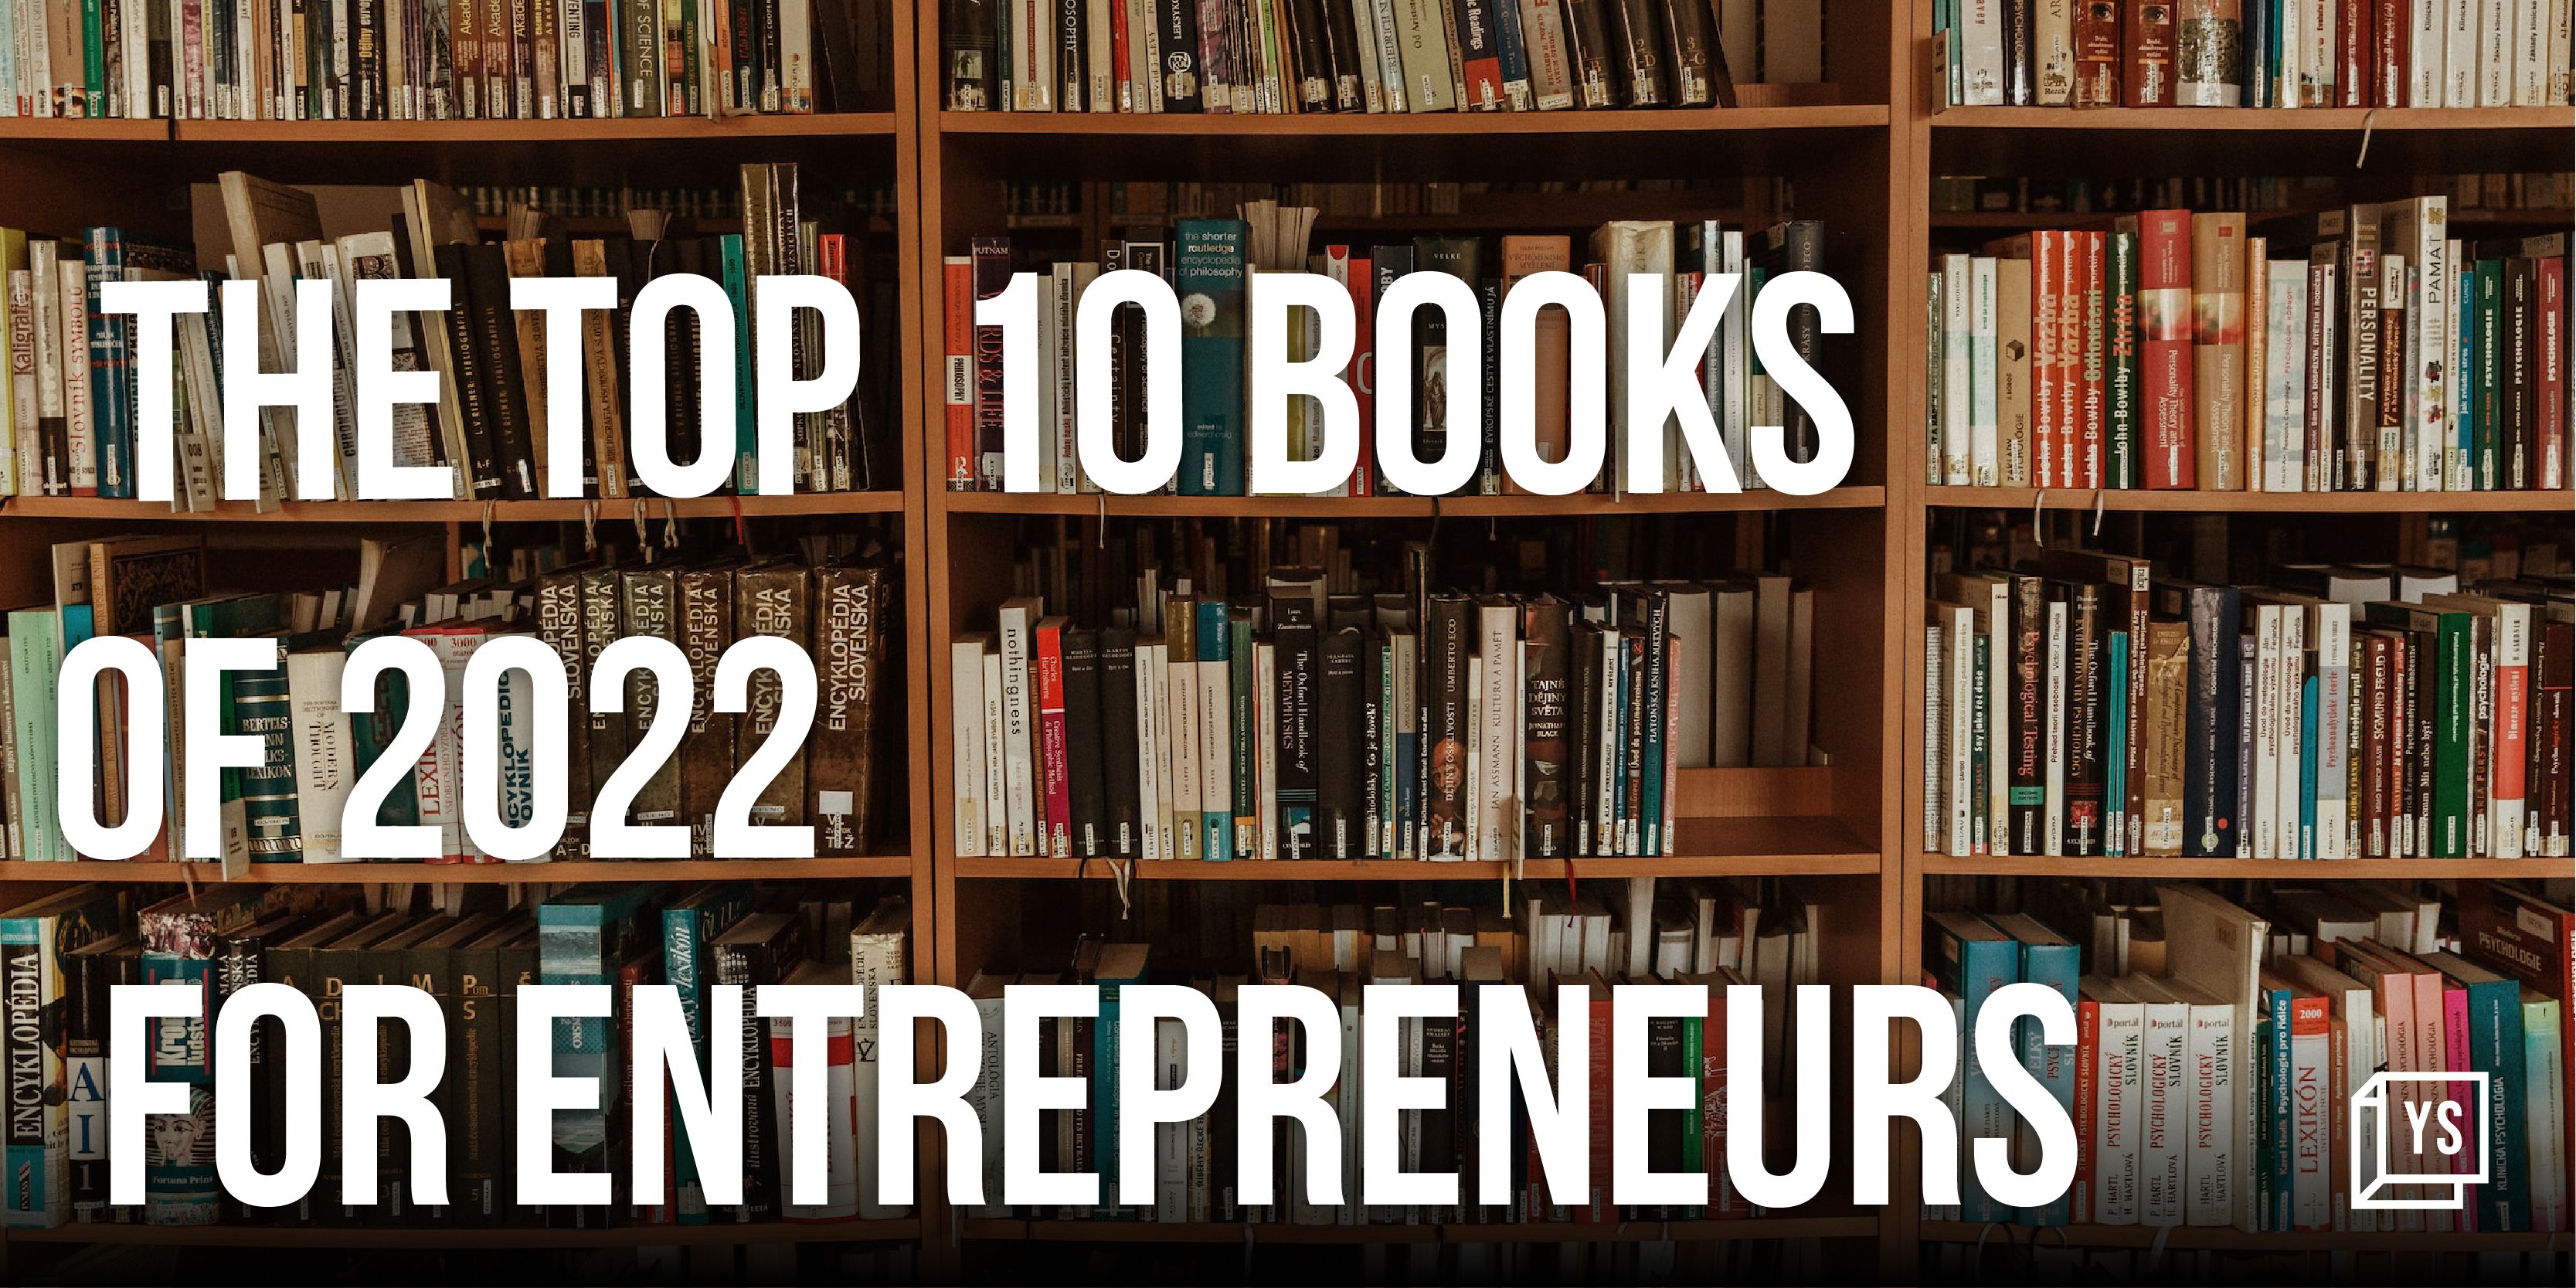 The top 10 books of 2022 for entrepreneurs